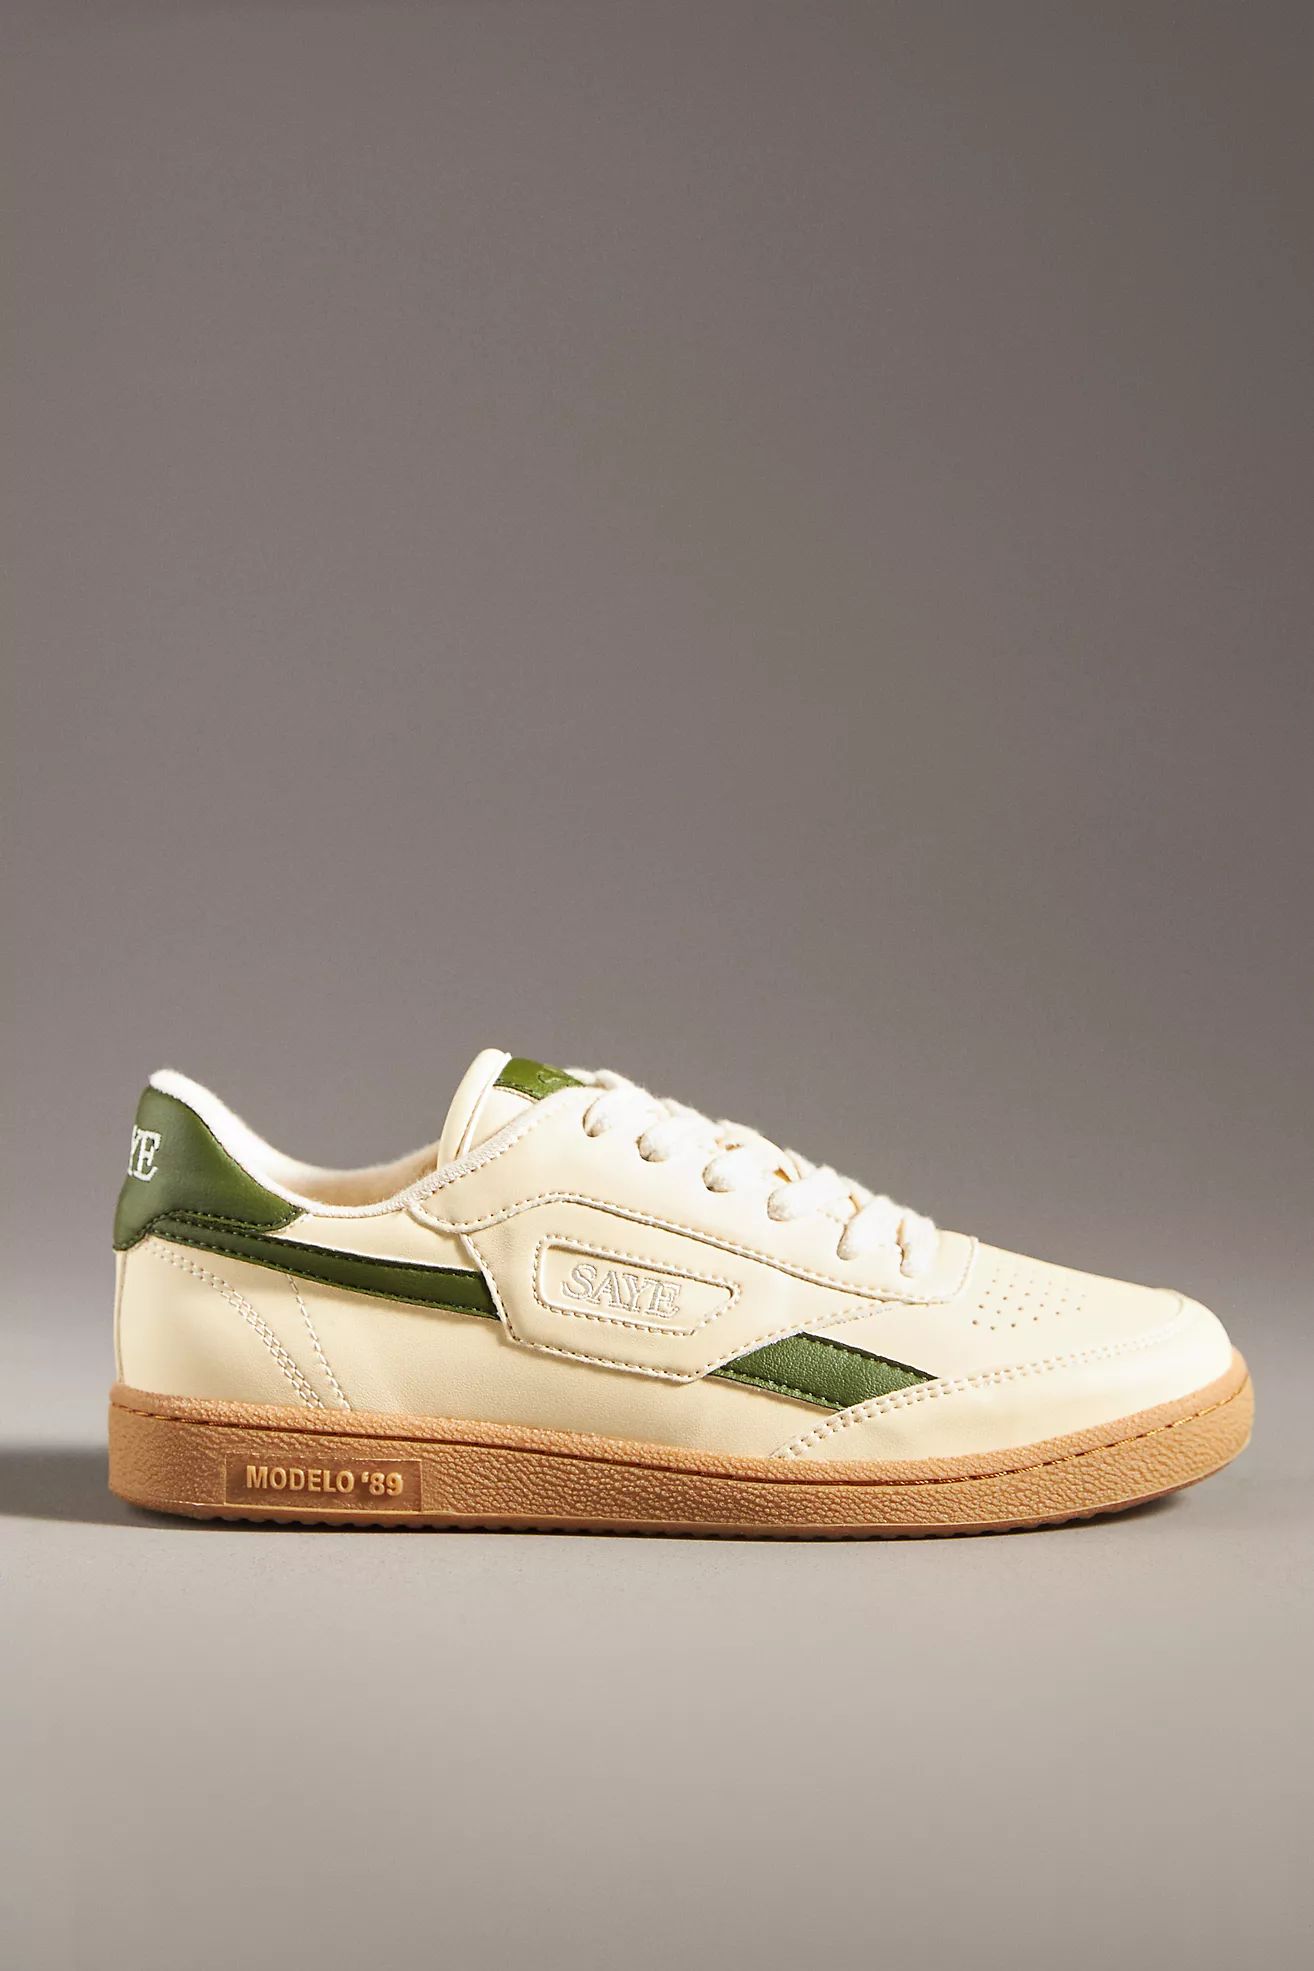 SAYE Modelo '89 Sneakers | Anthropologie (US)